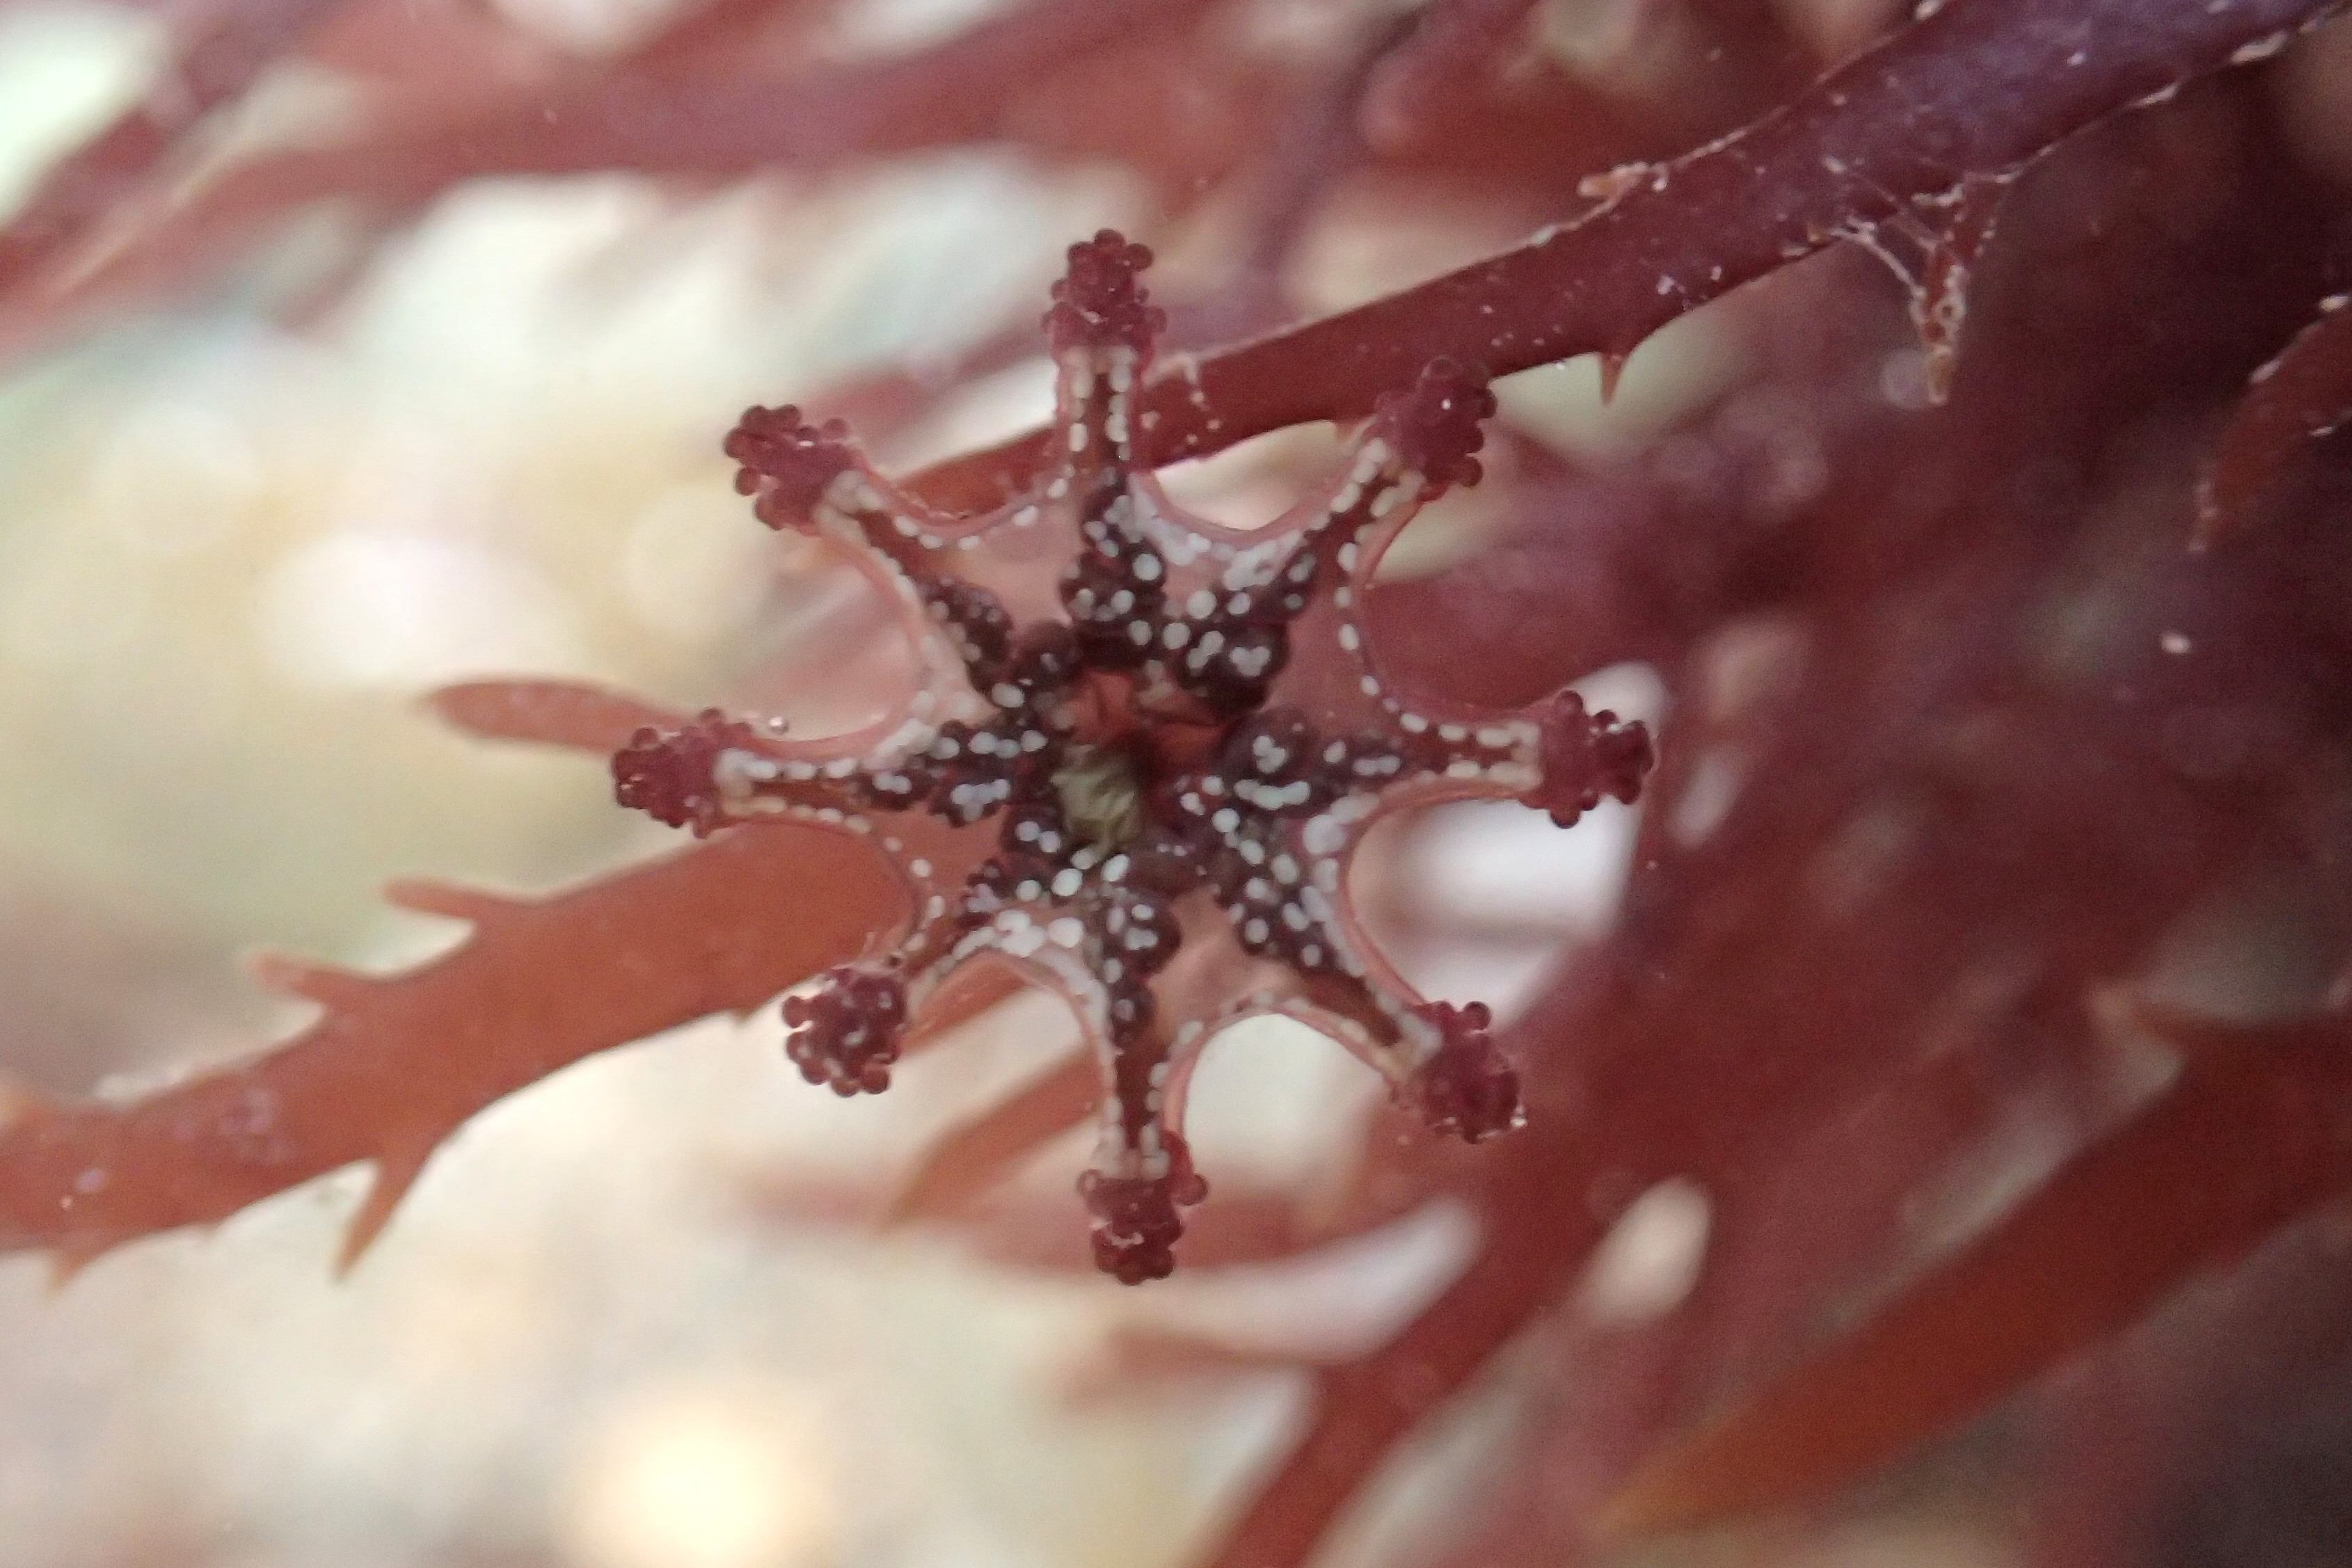 Cornish rockpool junior's first stalked jellyfish - Calvadosia cruxmelitensis